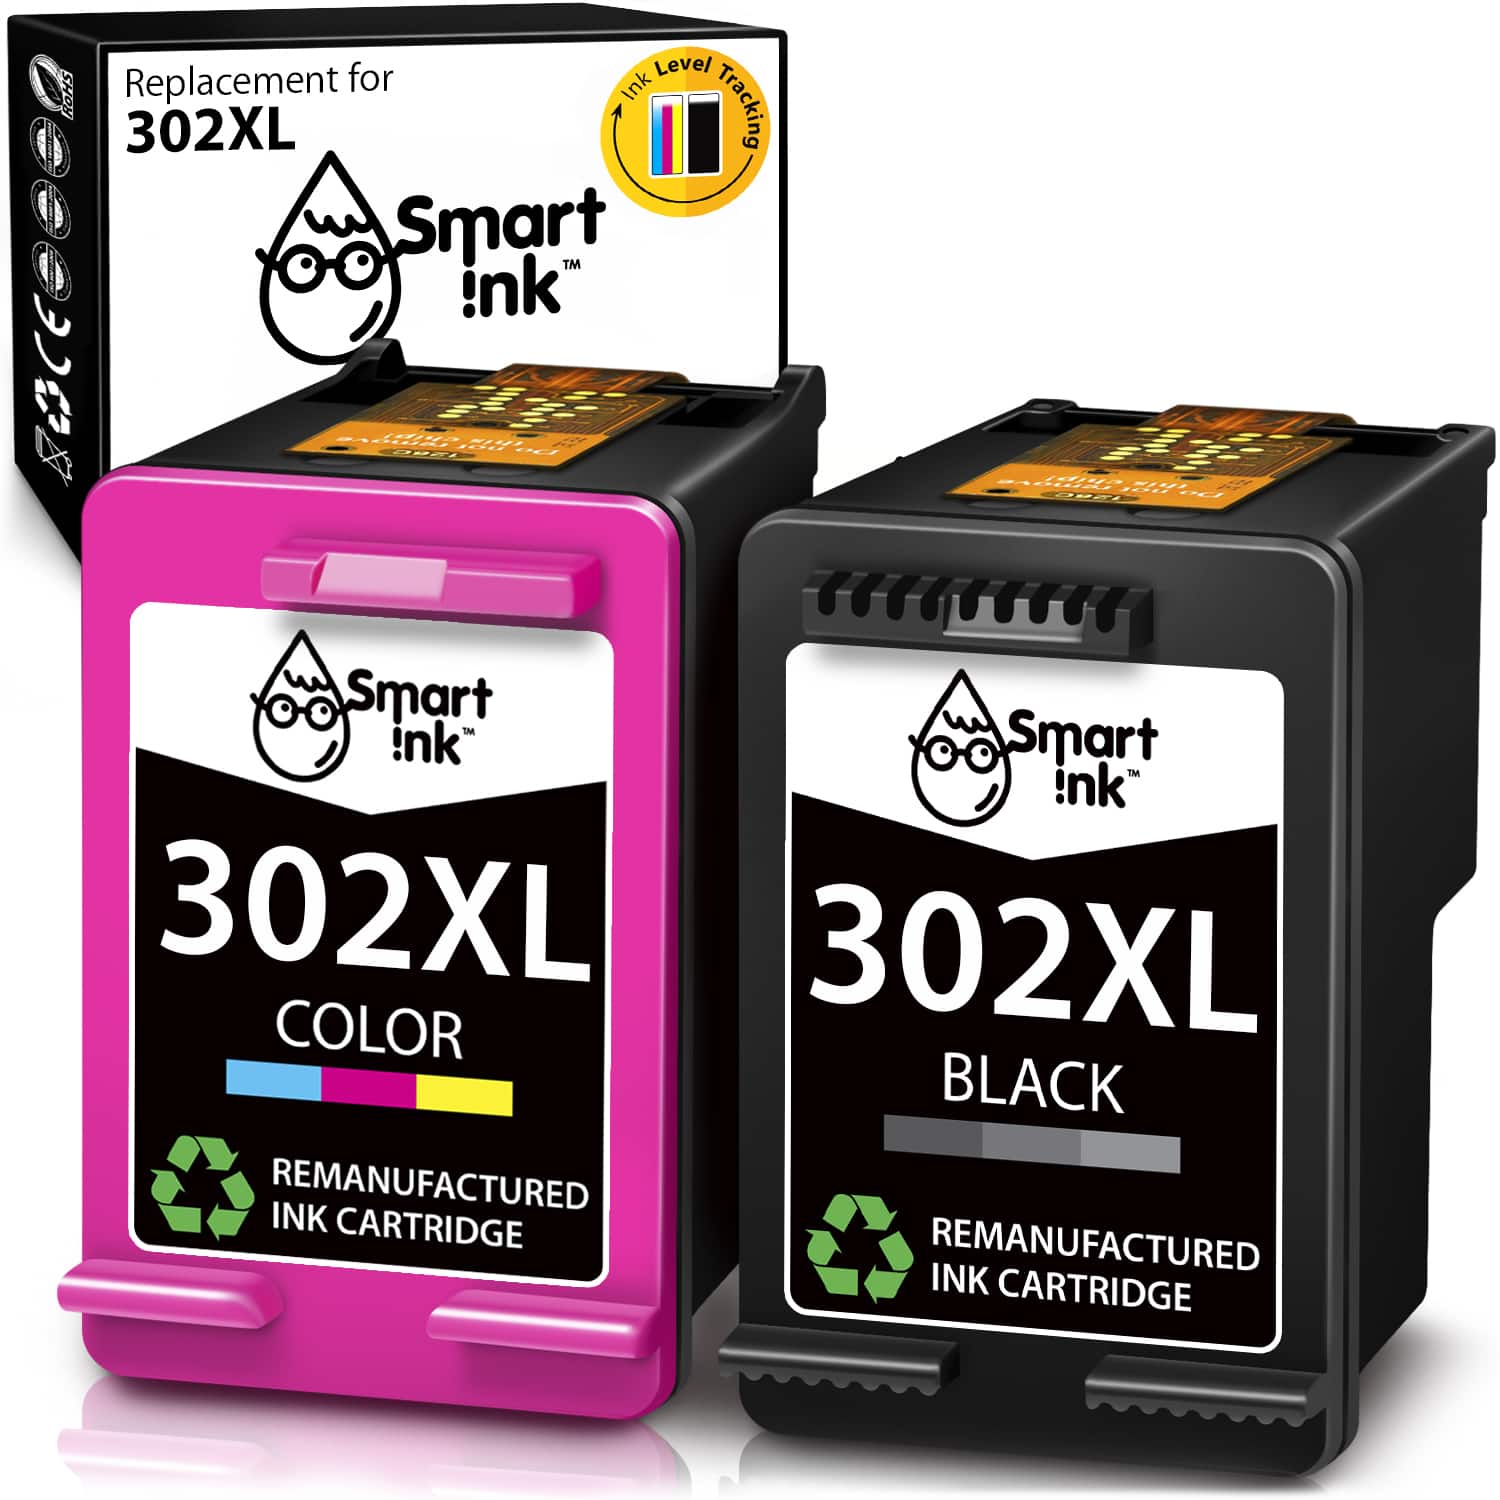 HP 302 XL Replacement Ink Cartridges - Buy HP 302 XL Cartridges in EU